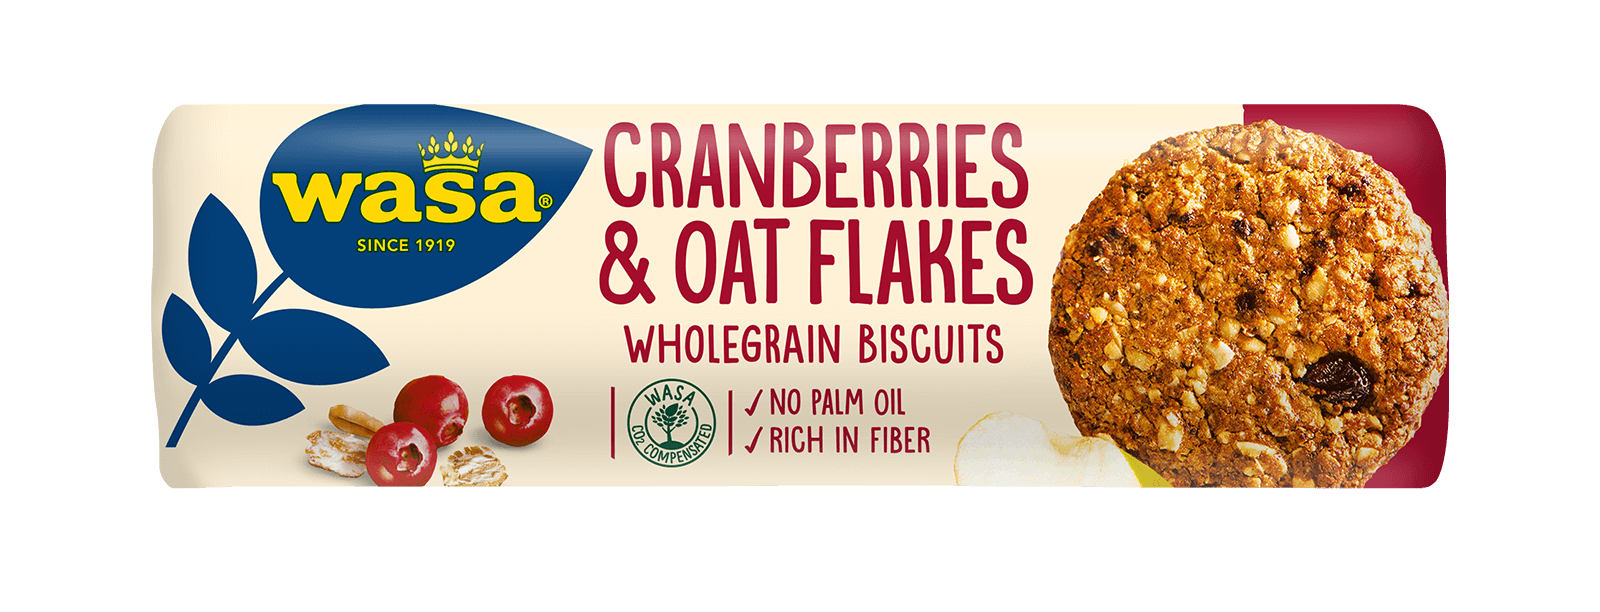 Cranberries & Oat Flakes